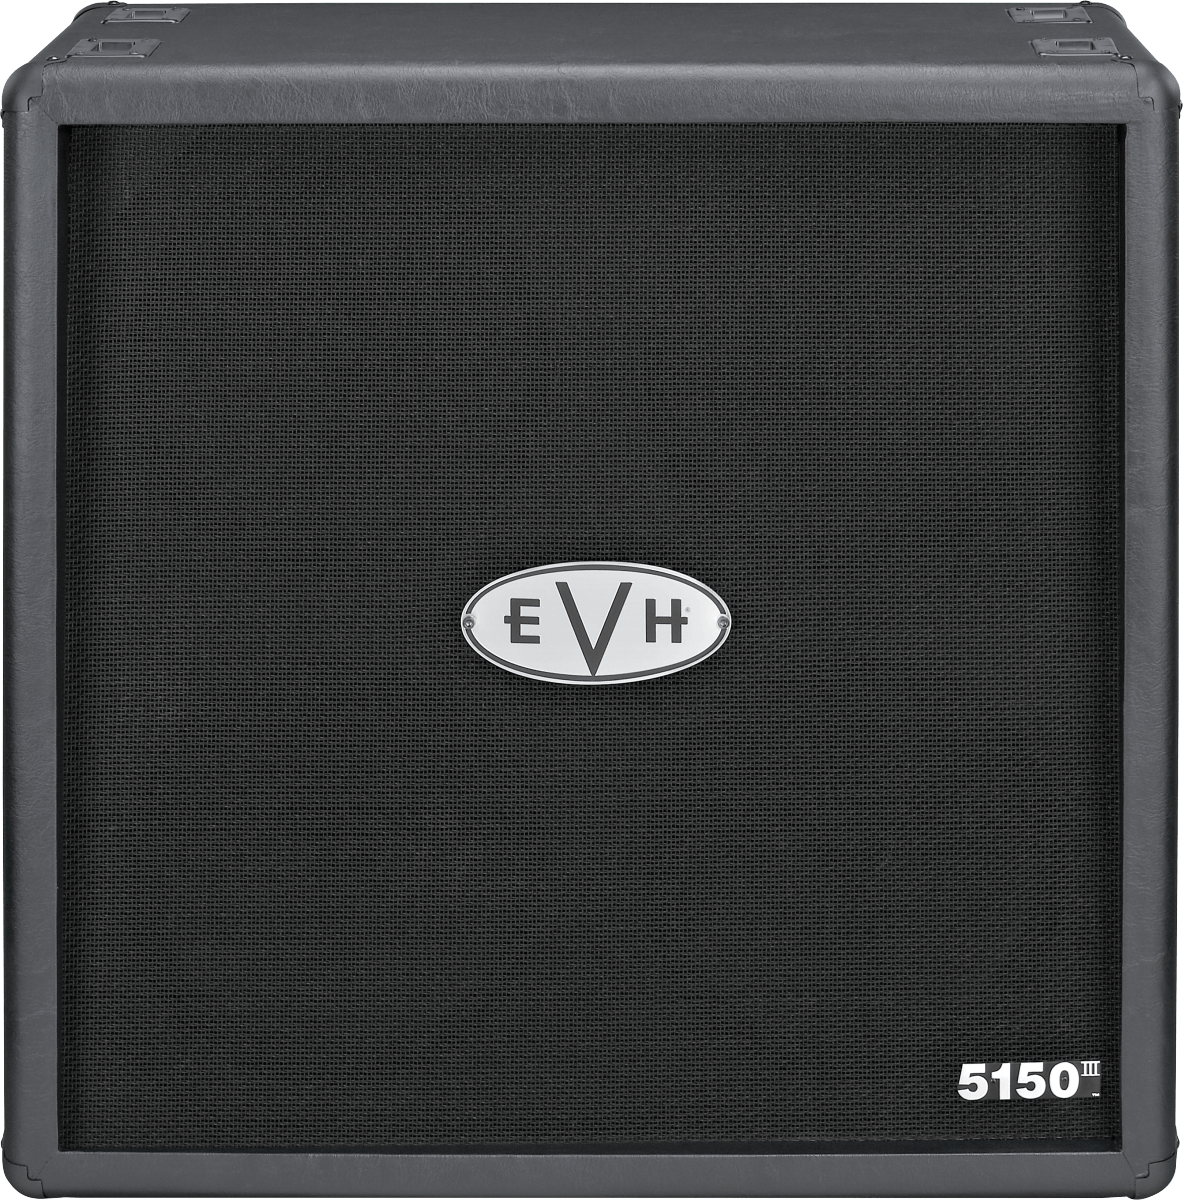 EVH 5150 III 4x12 Cab in Black